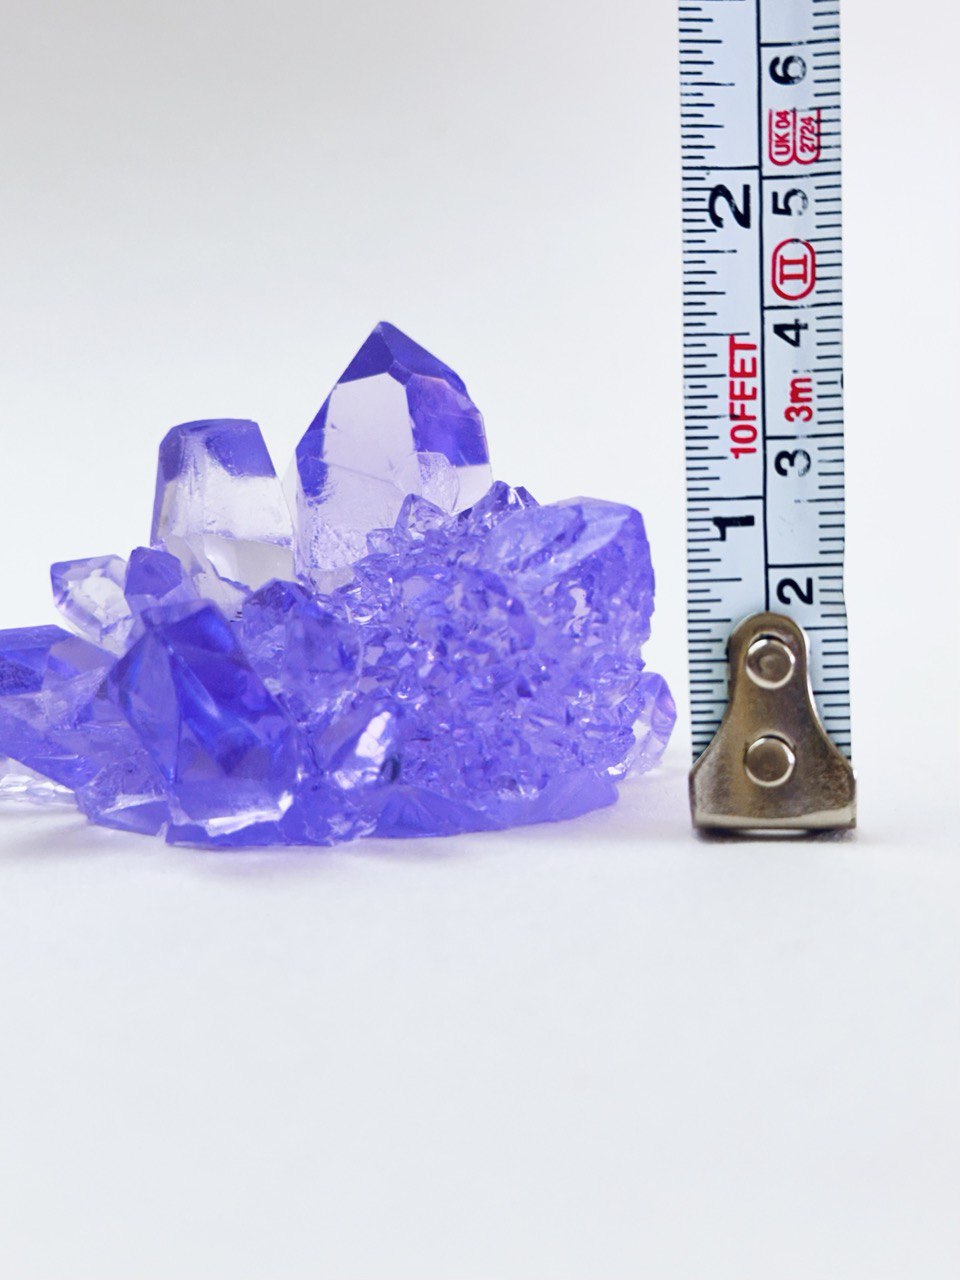 Stunning Amethyst Crystals Silicone Mold